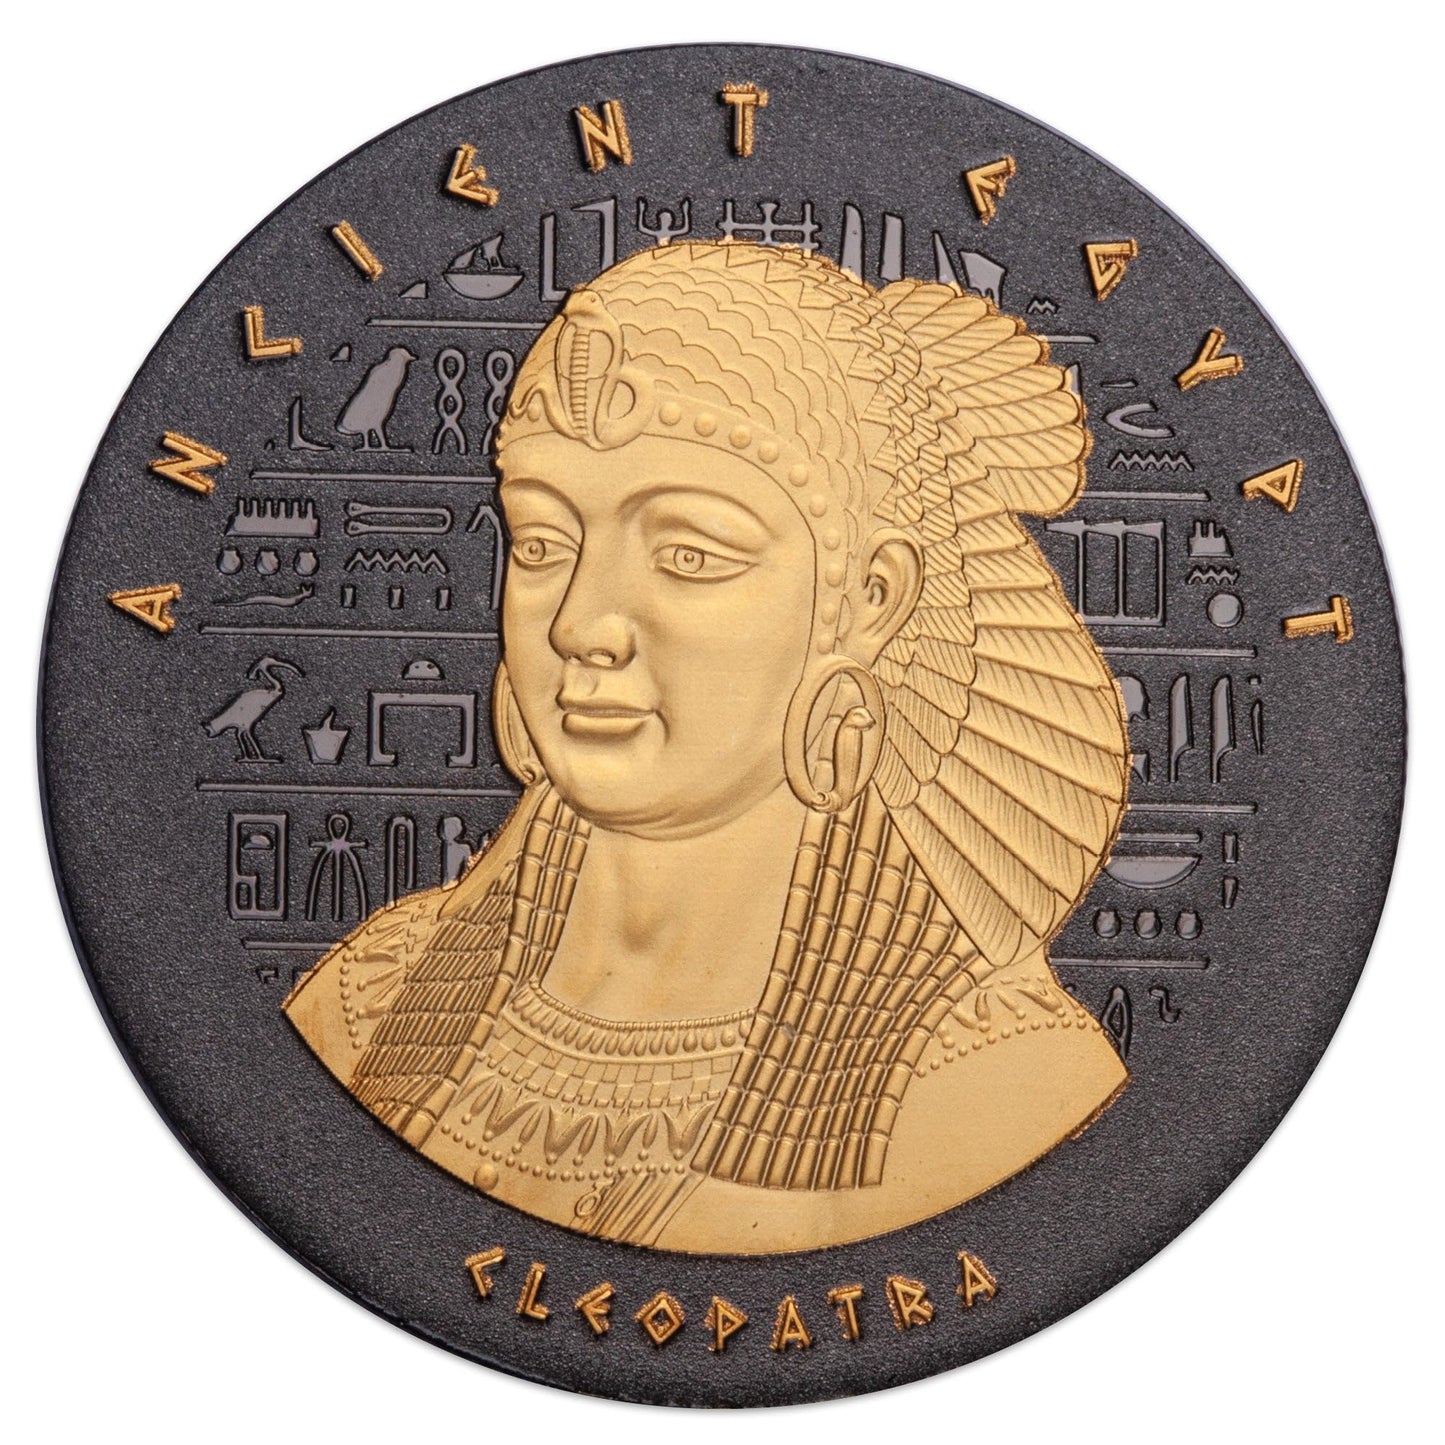 Exquisite 2019 Solomon Islands Cleopatra $1 Coin – Ancient Egypt Tribute!”